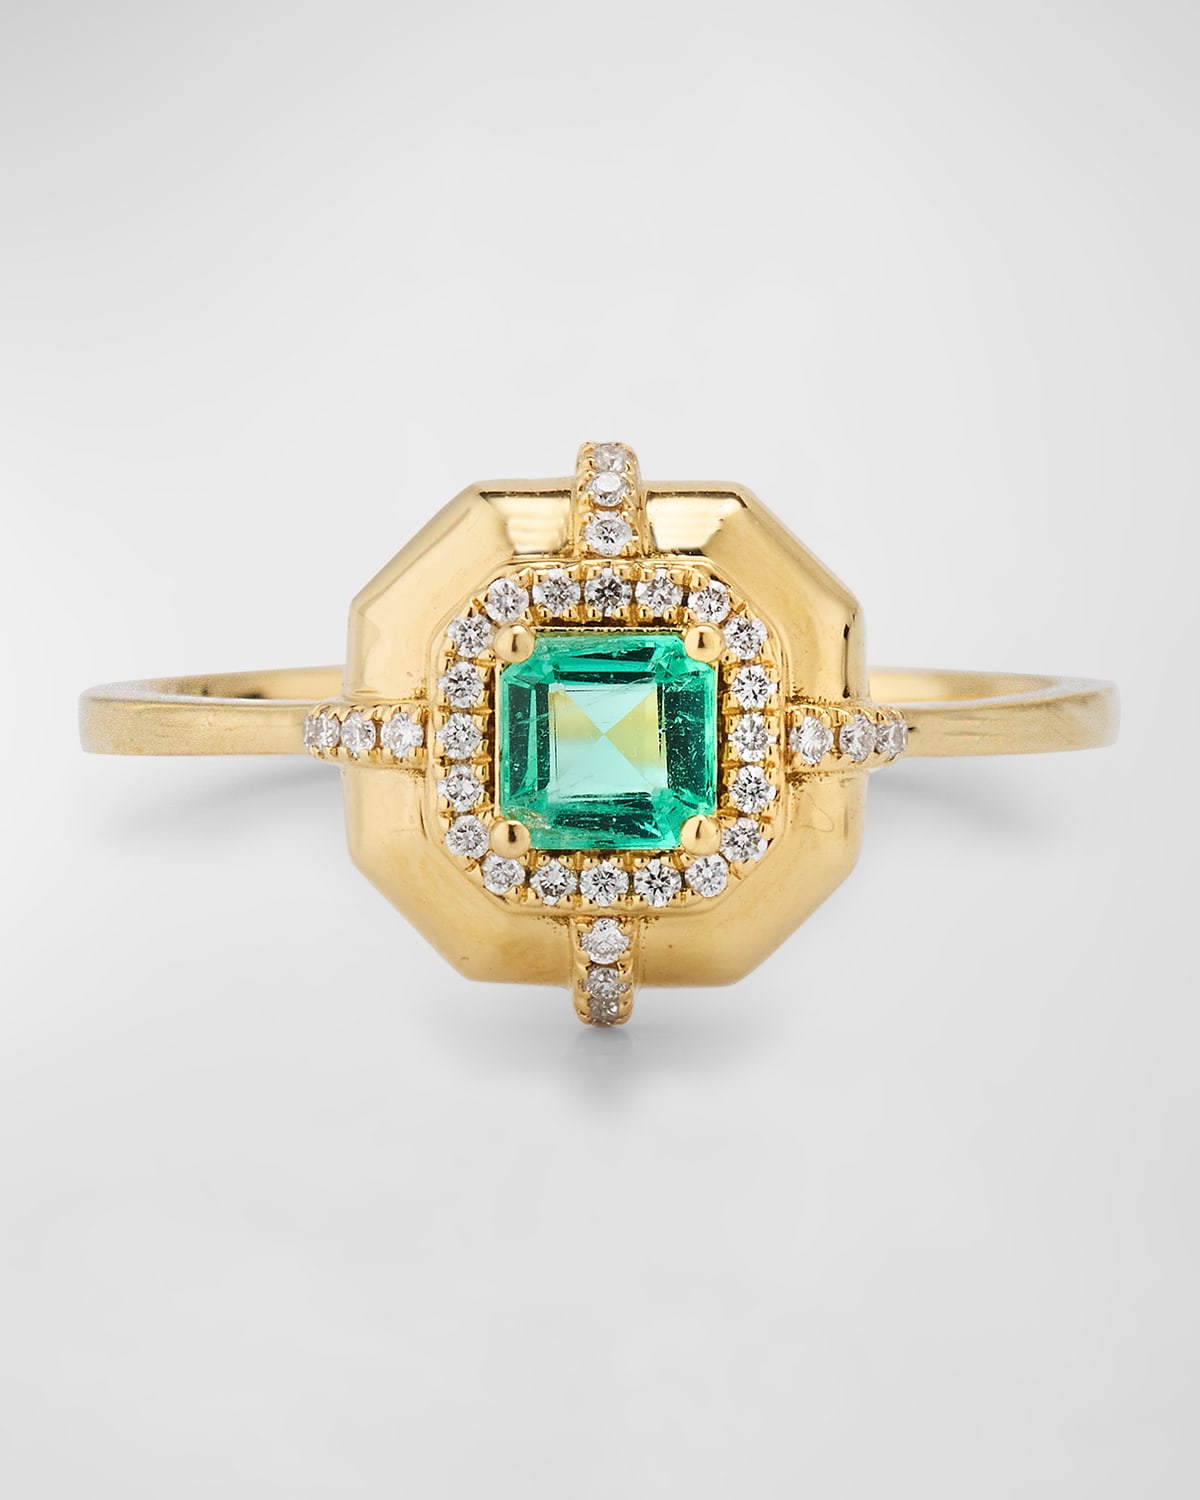 G-Classics' 4mm Asscher Cut Emerald Ring with Diamonds in 18K Yellow Gold